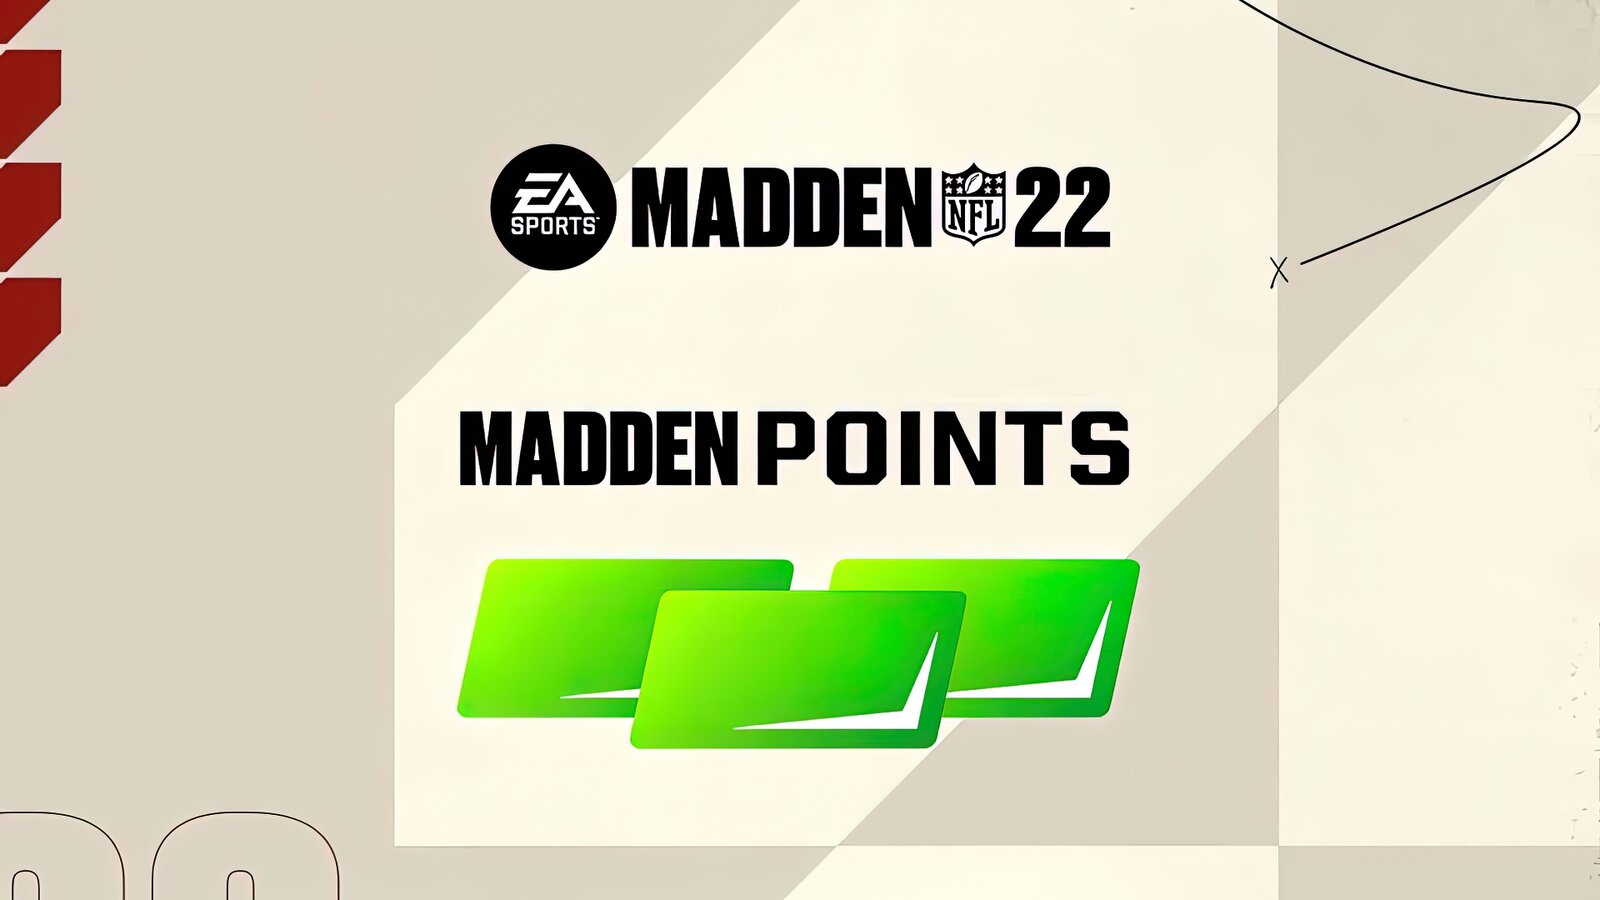 Madden NFL 22 - Madden Points